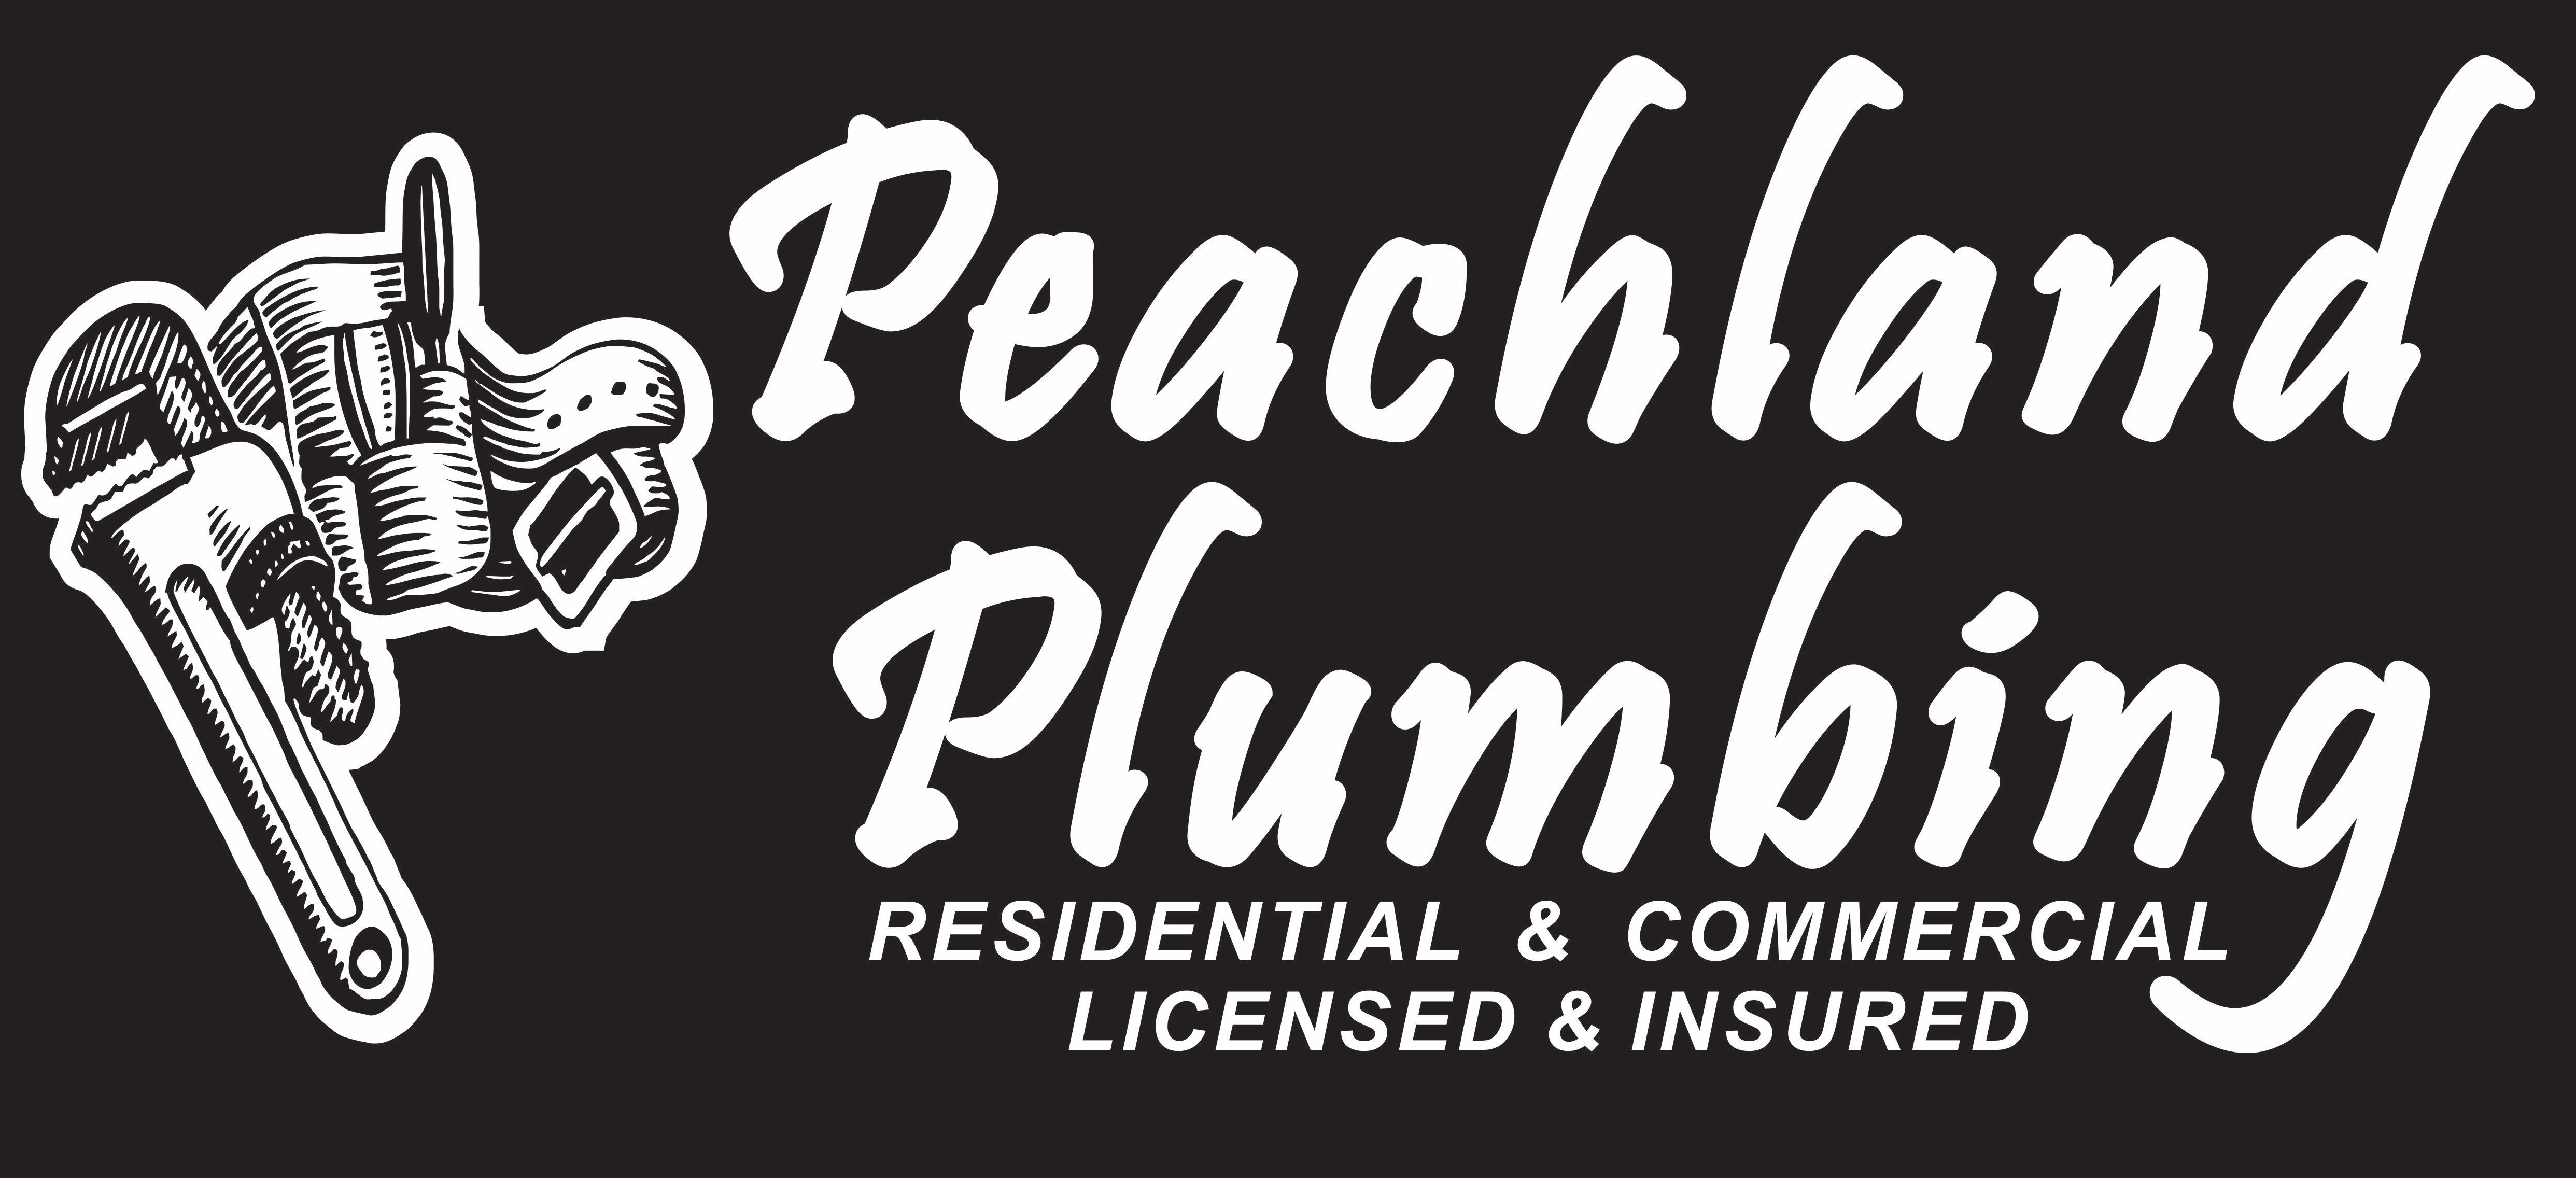 Peachland Plumbing